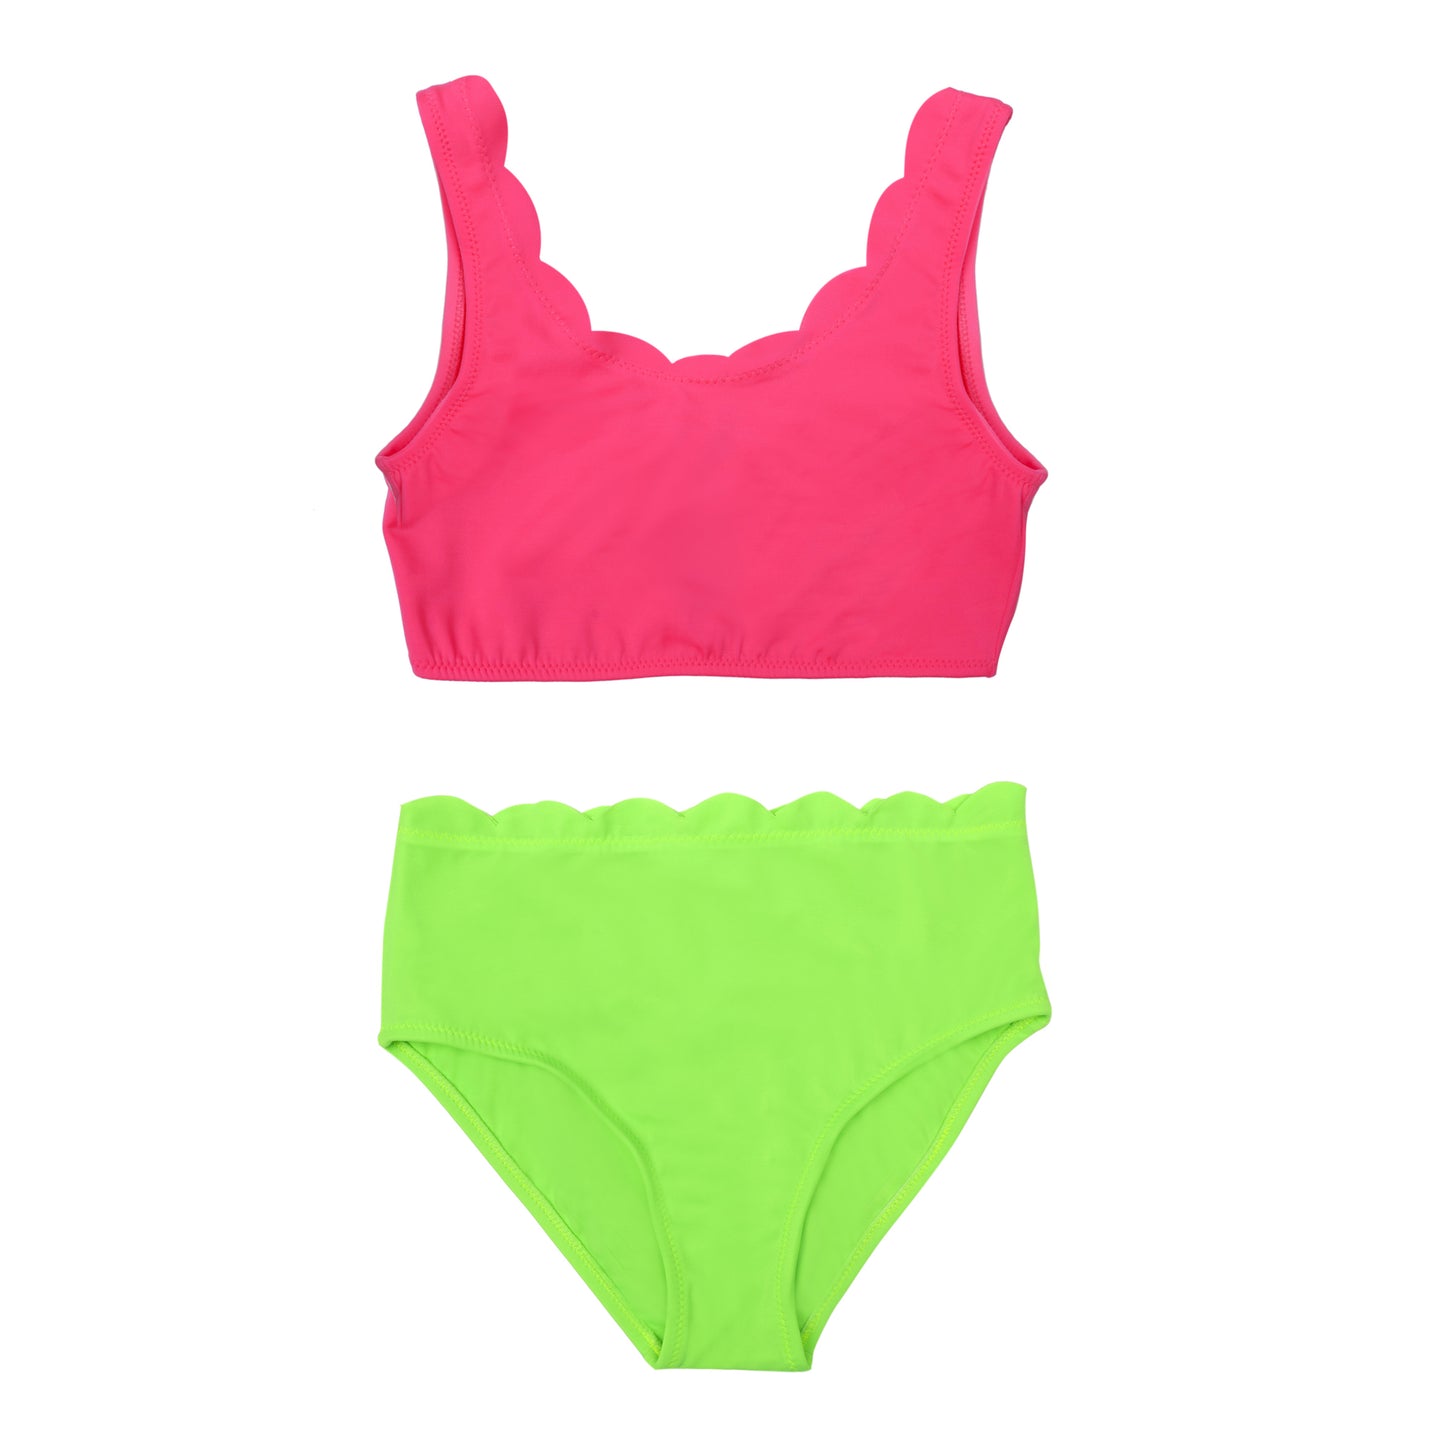 Load image into Gallery viewer, Girls Neon Bikini in Pink/Green
